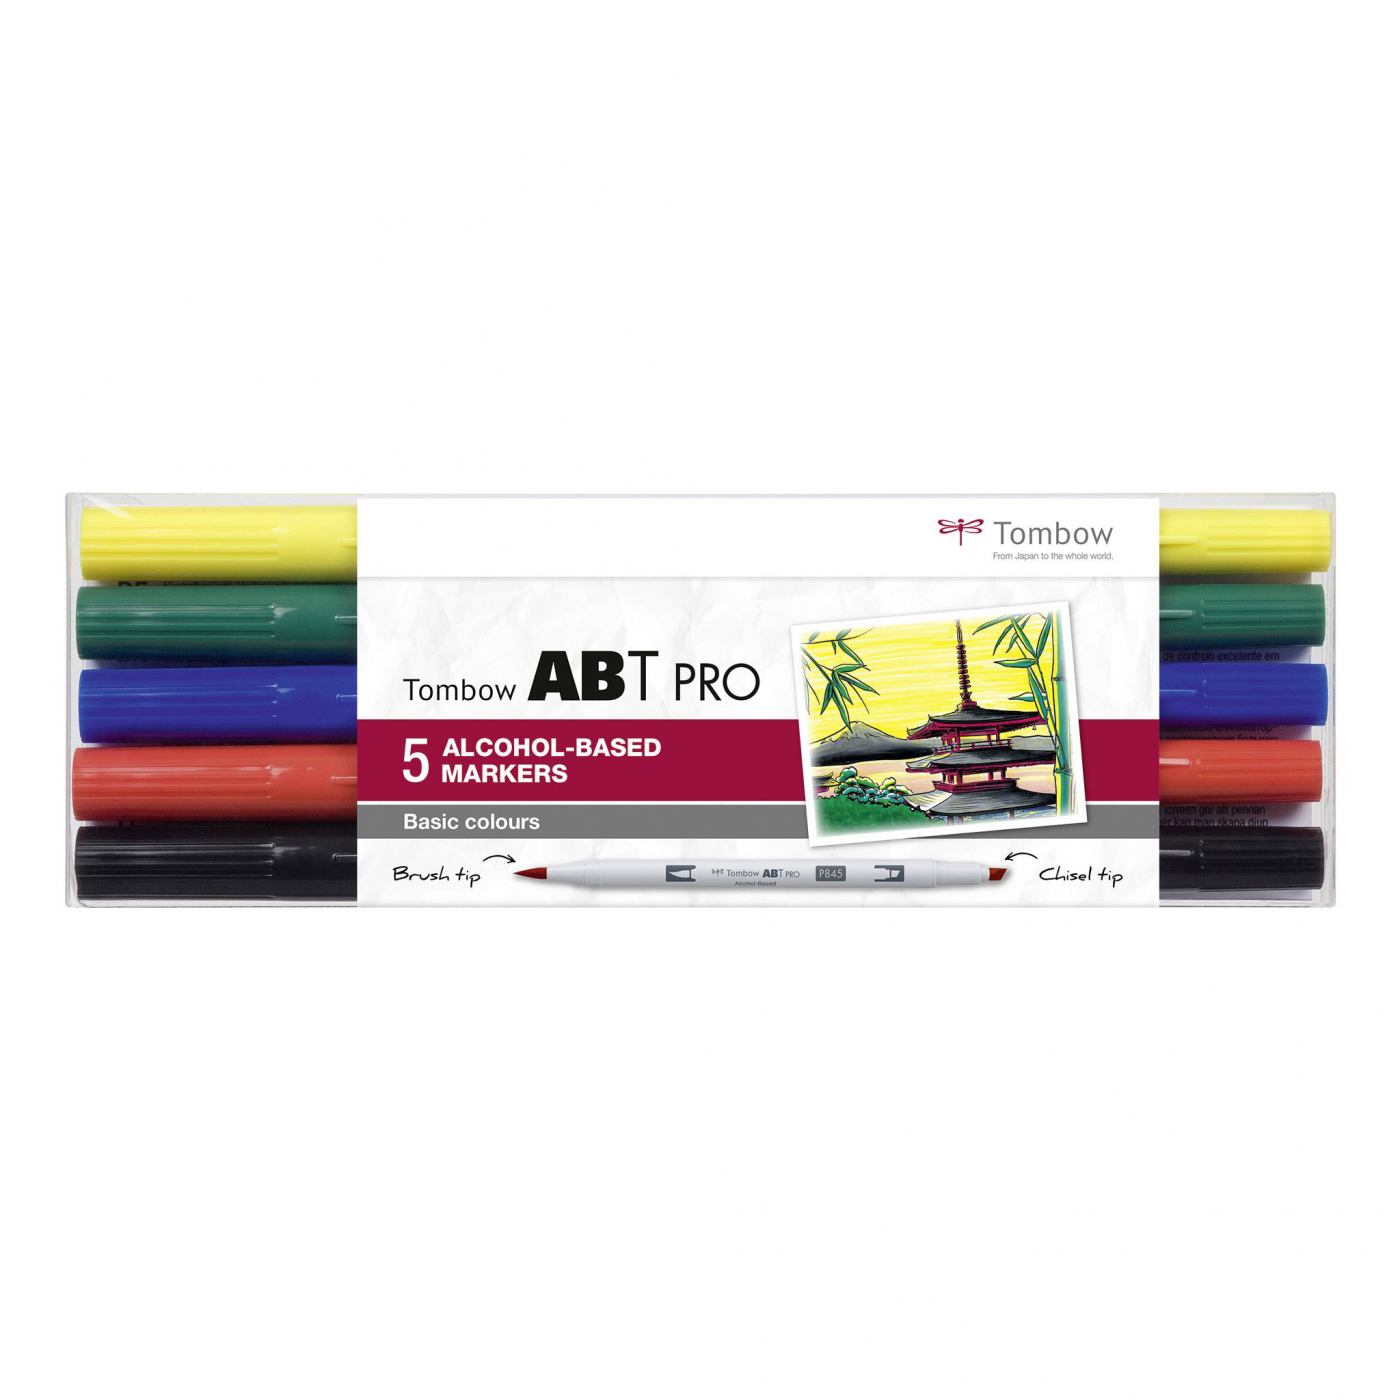 ABT PRO Dual Brush Pen 5-set Basic in the group Pens / Artist Pens / Illustration Markers at Pen Store (125264)